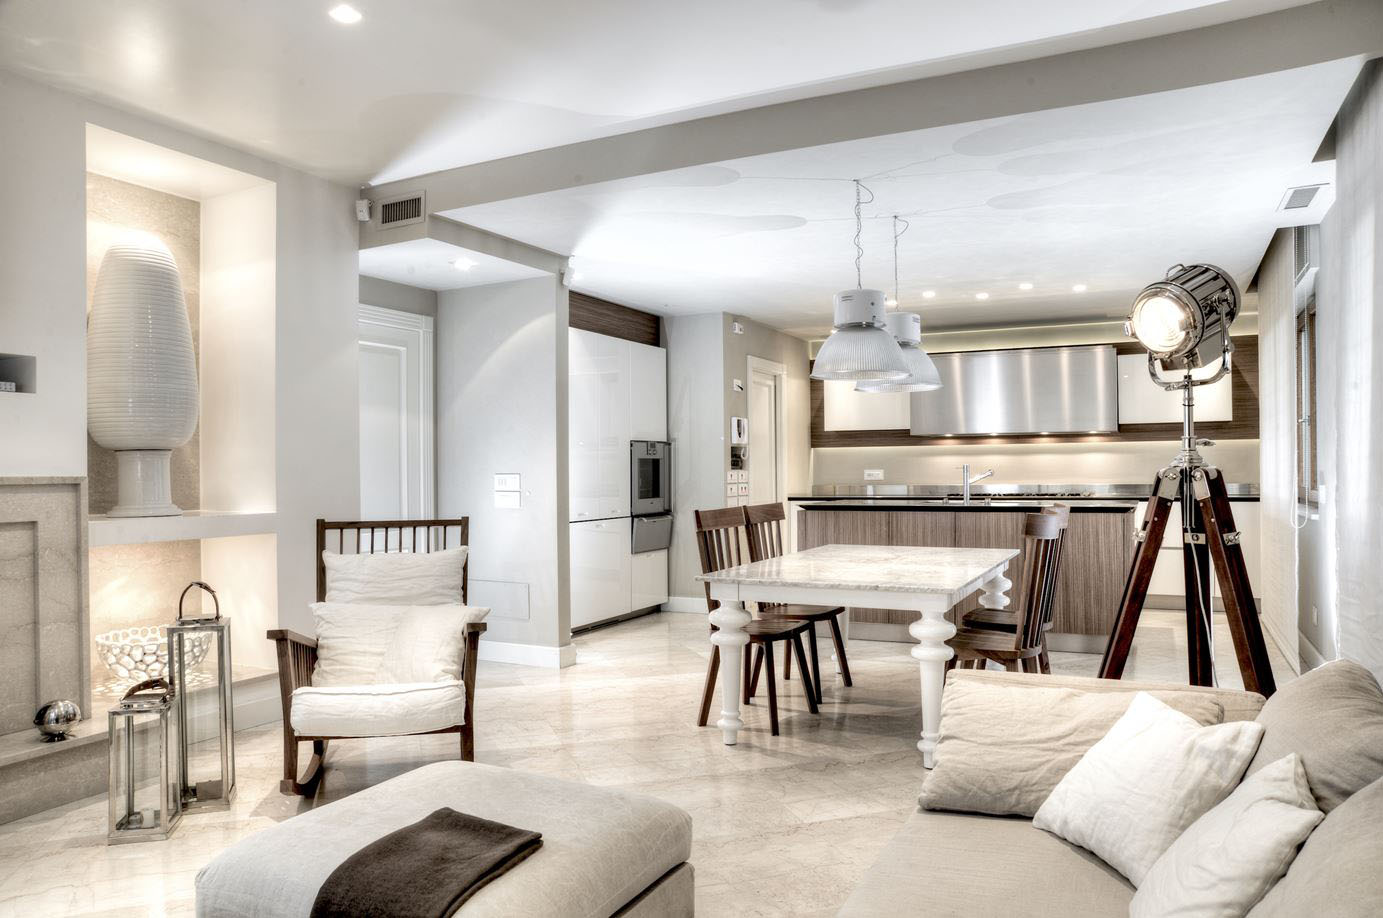 Luxury Home Interior With Timeless Contemporary Elegance | iDesignArc… 